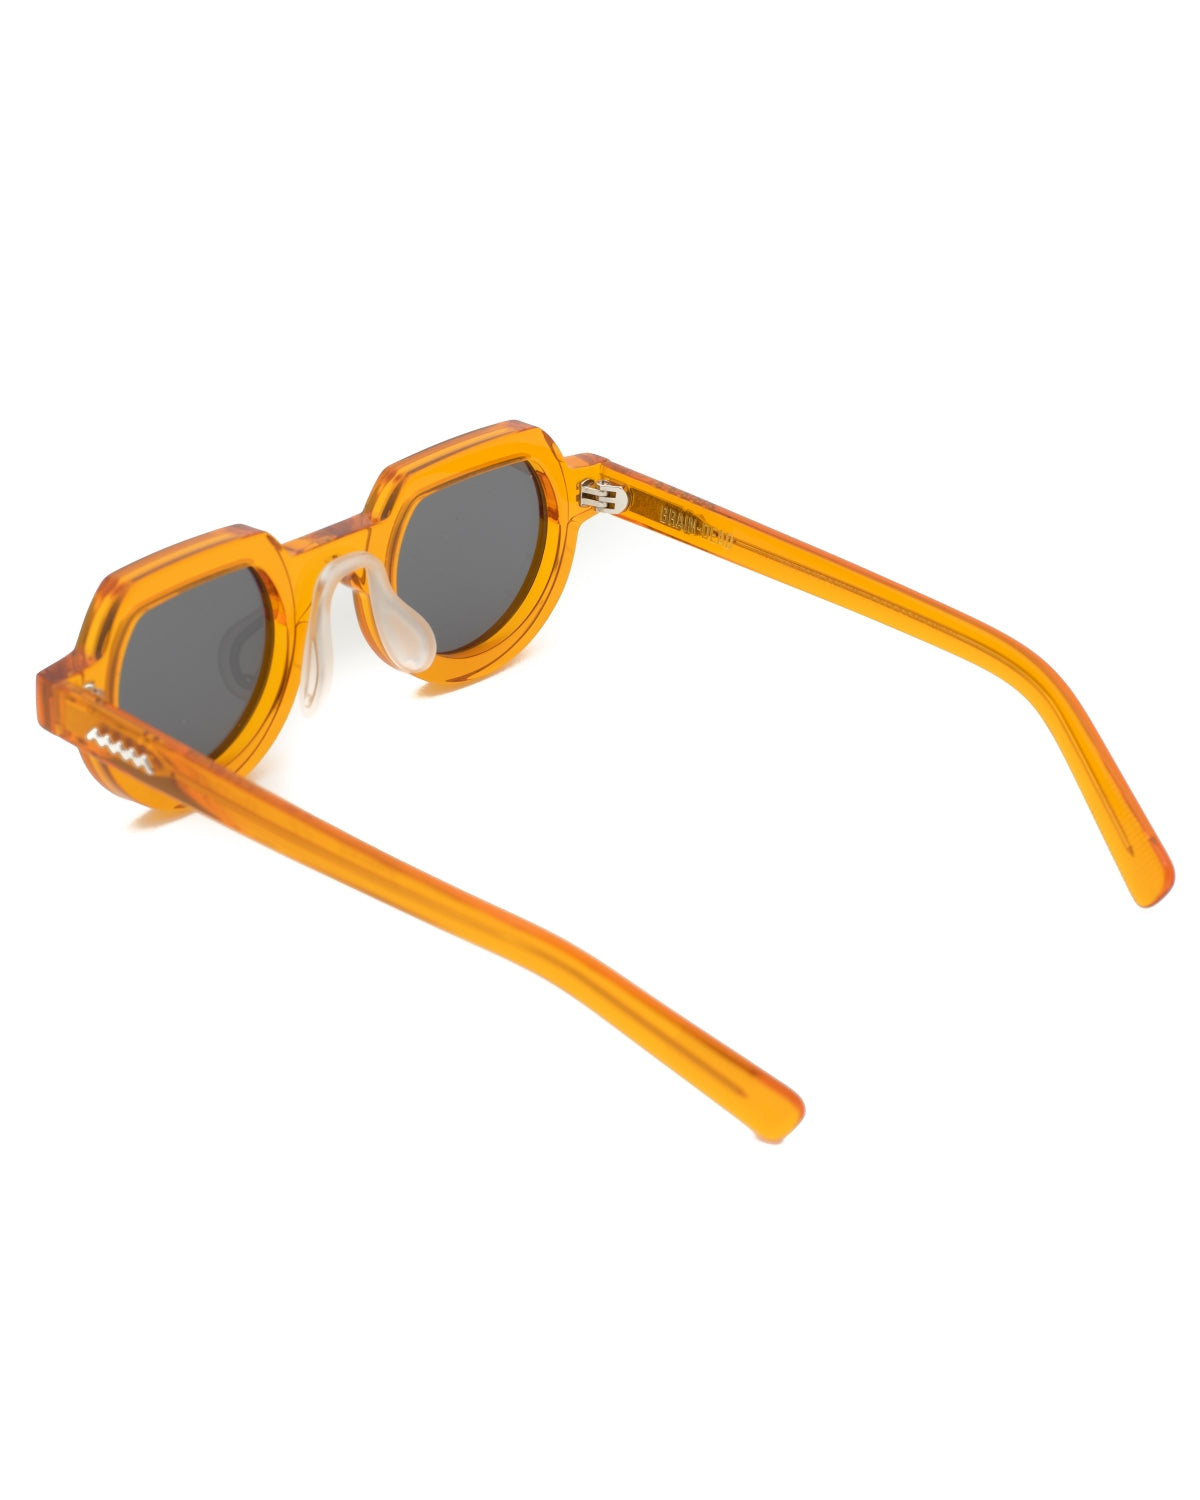 Tani Post Modern Primitive Eye Protection - Orange/Silver Reflective 2